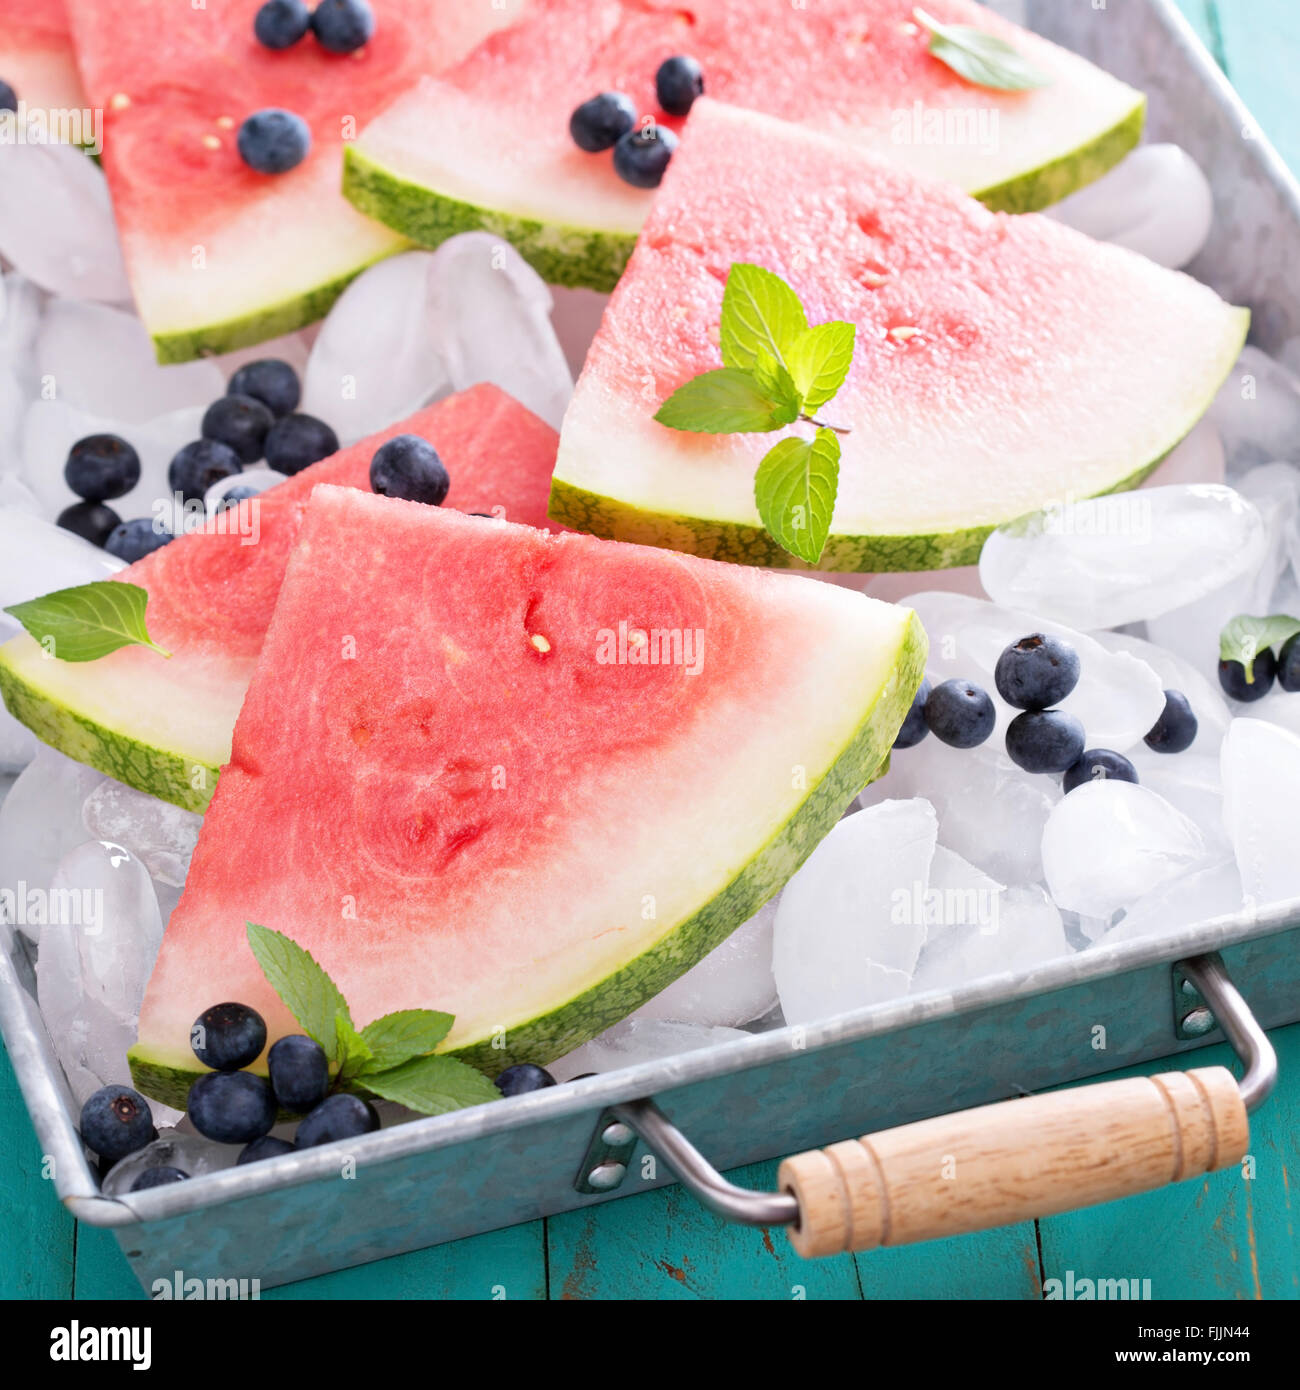 Watermelon slices on ice Stock Photo